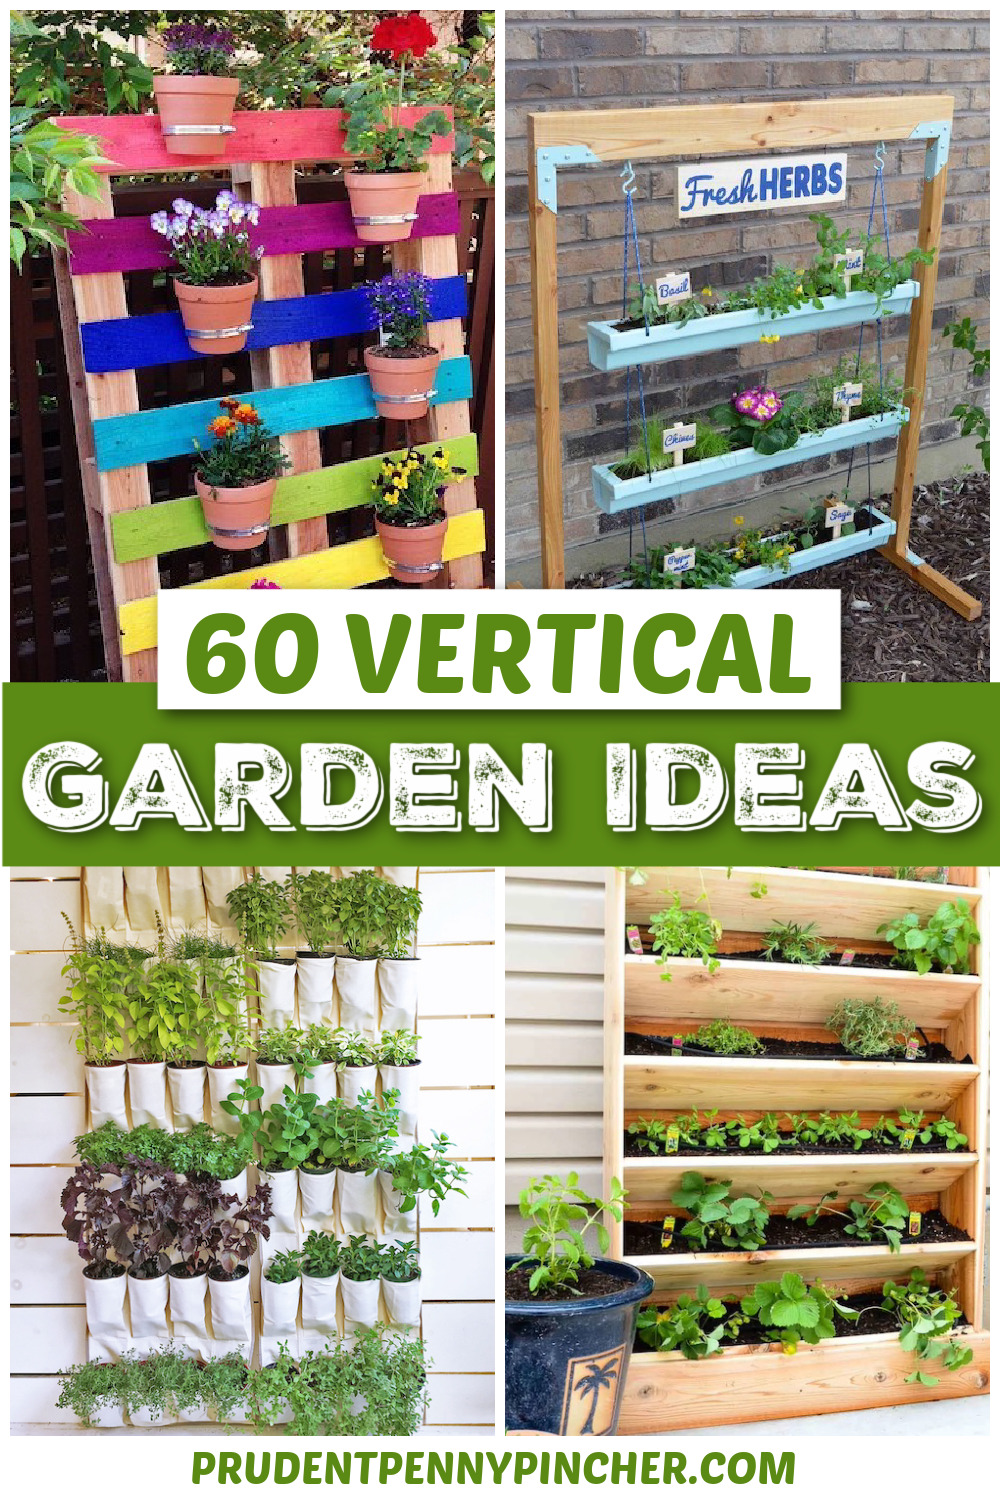 How to make a vertical garden - The Crafty Gentleman